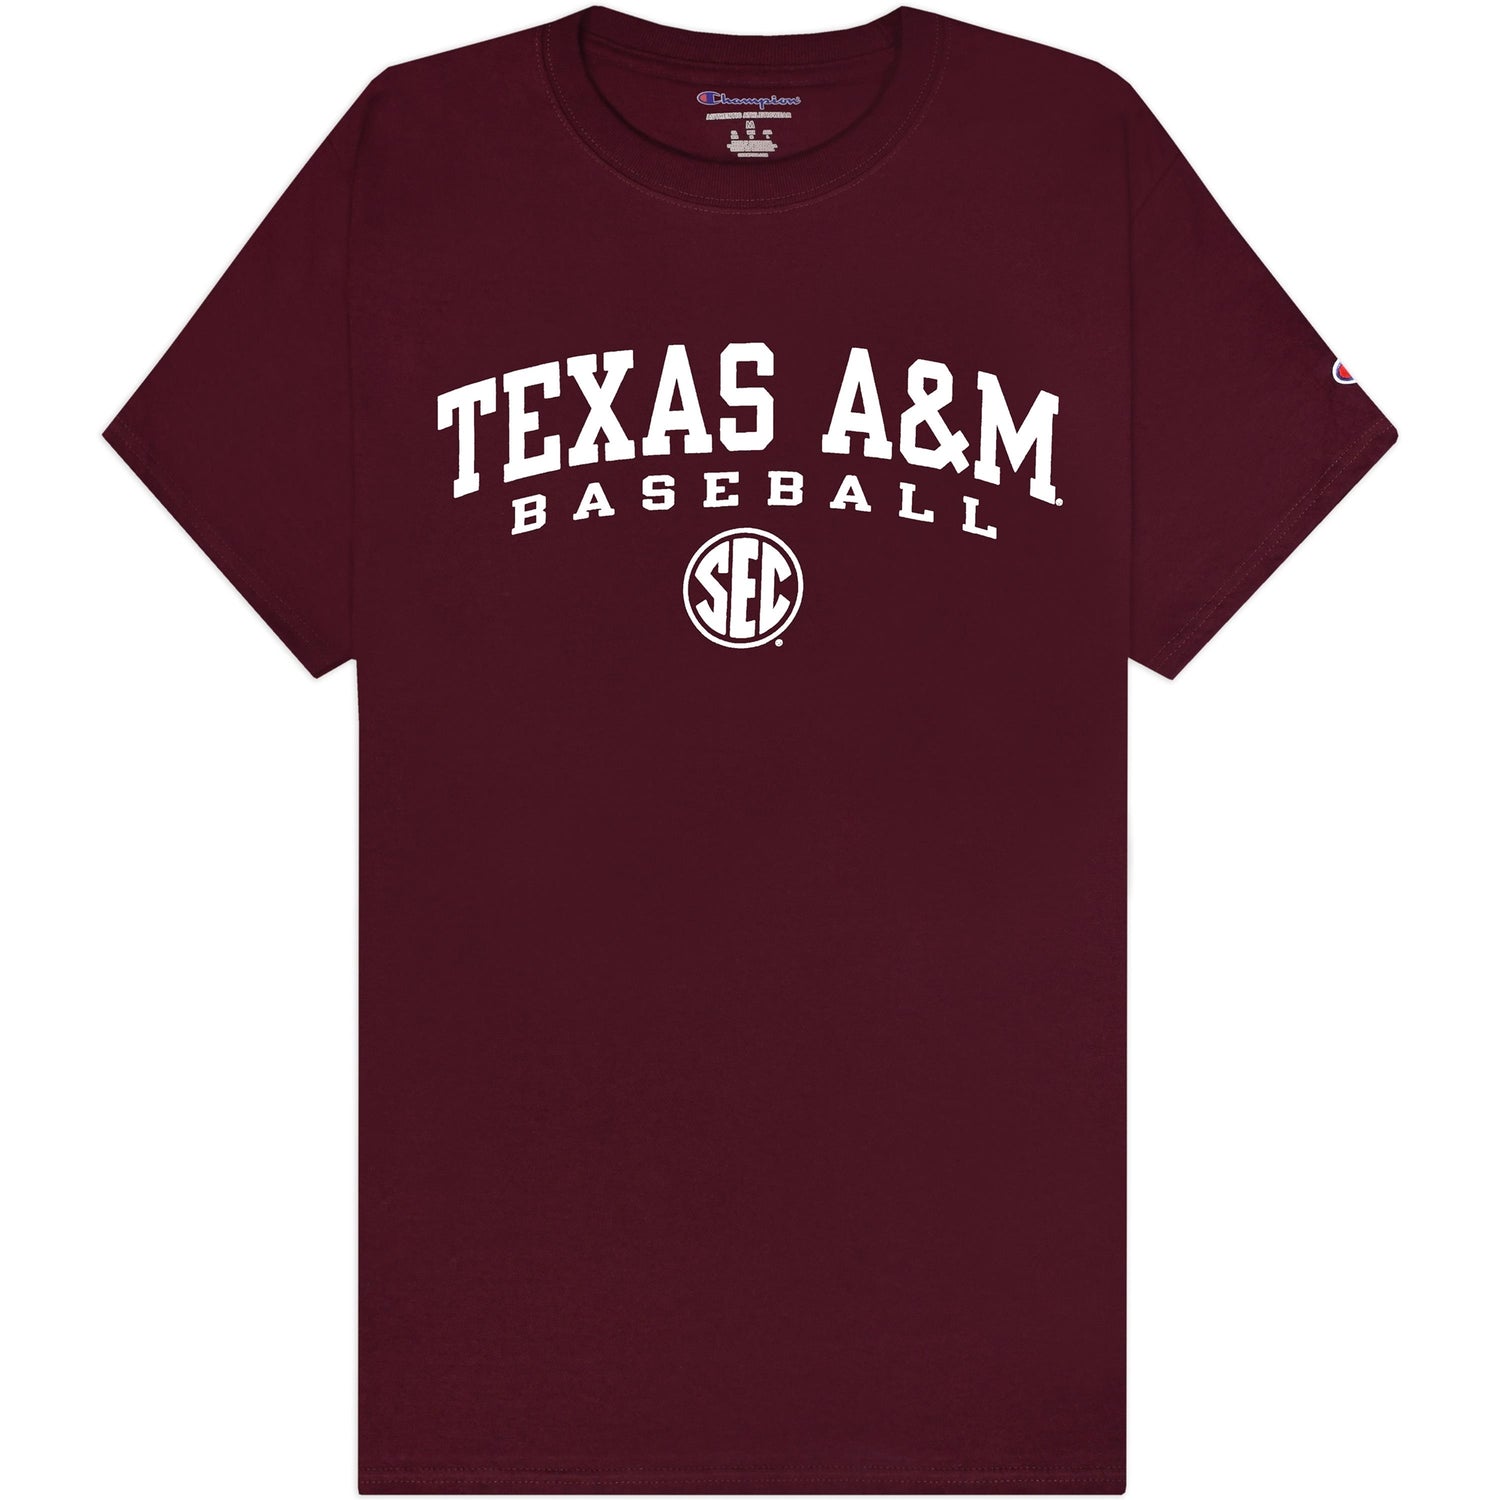 Texas A&M Champion Baseball SEC T-Shirt